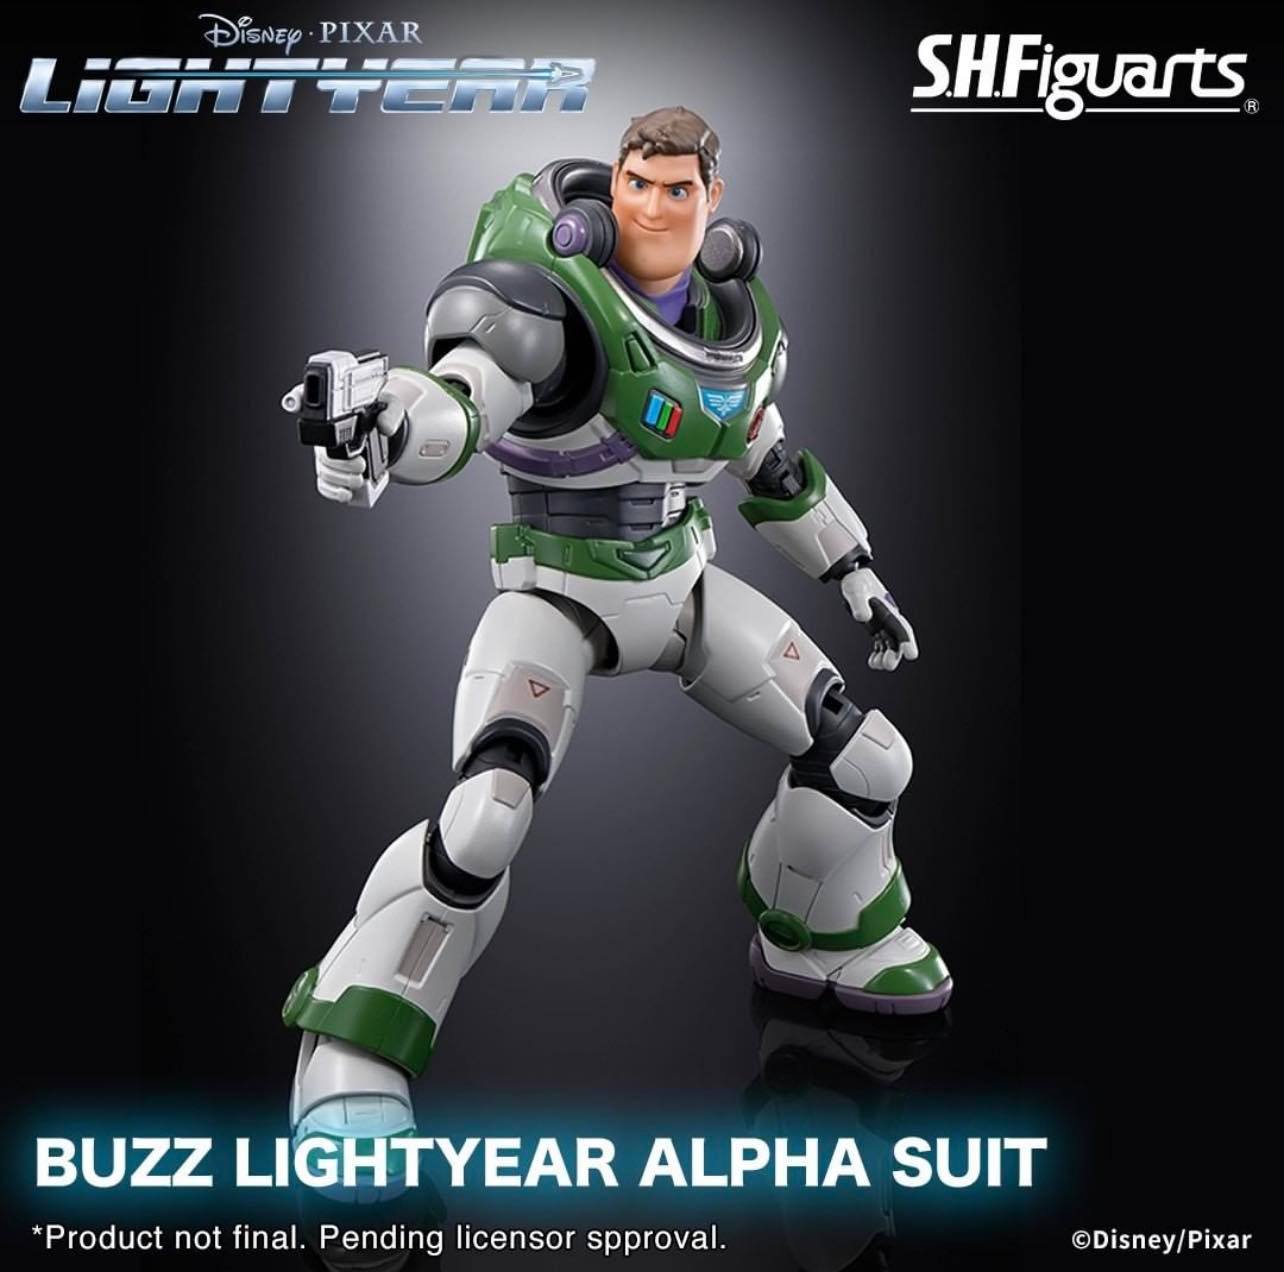 Disney & Pixar's LIGHTYEAR S.H.Figuarts Buzz Lightyear Alpha Suit (6)